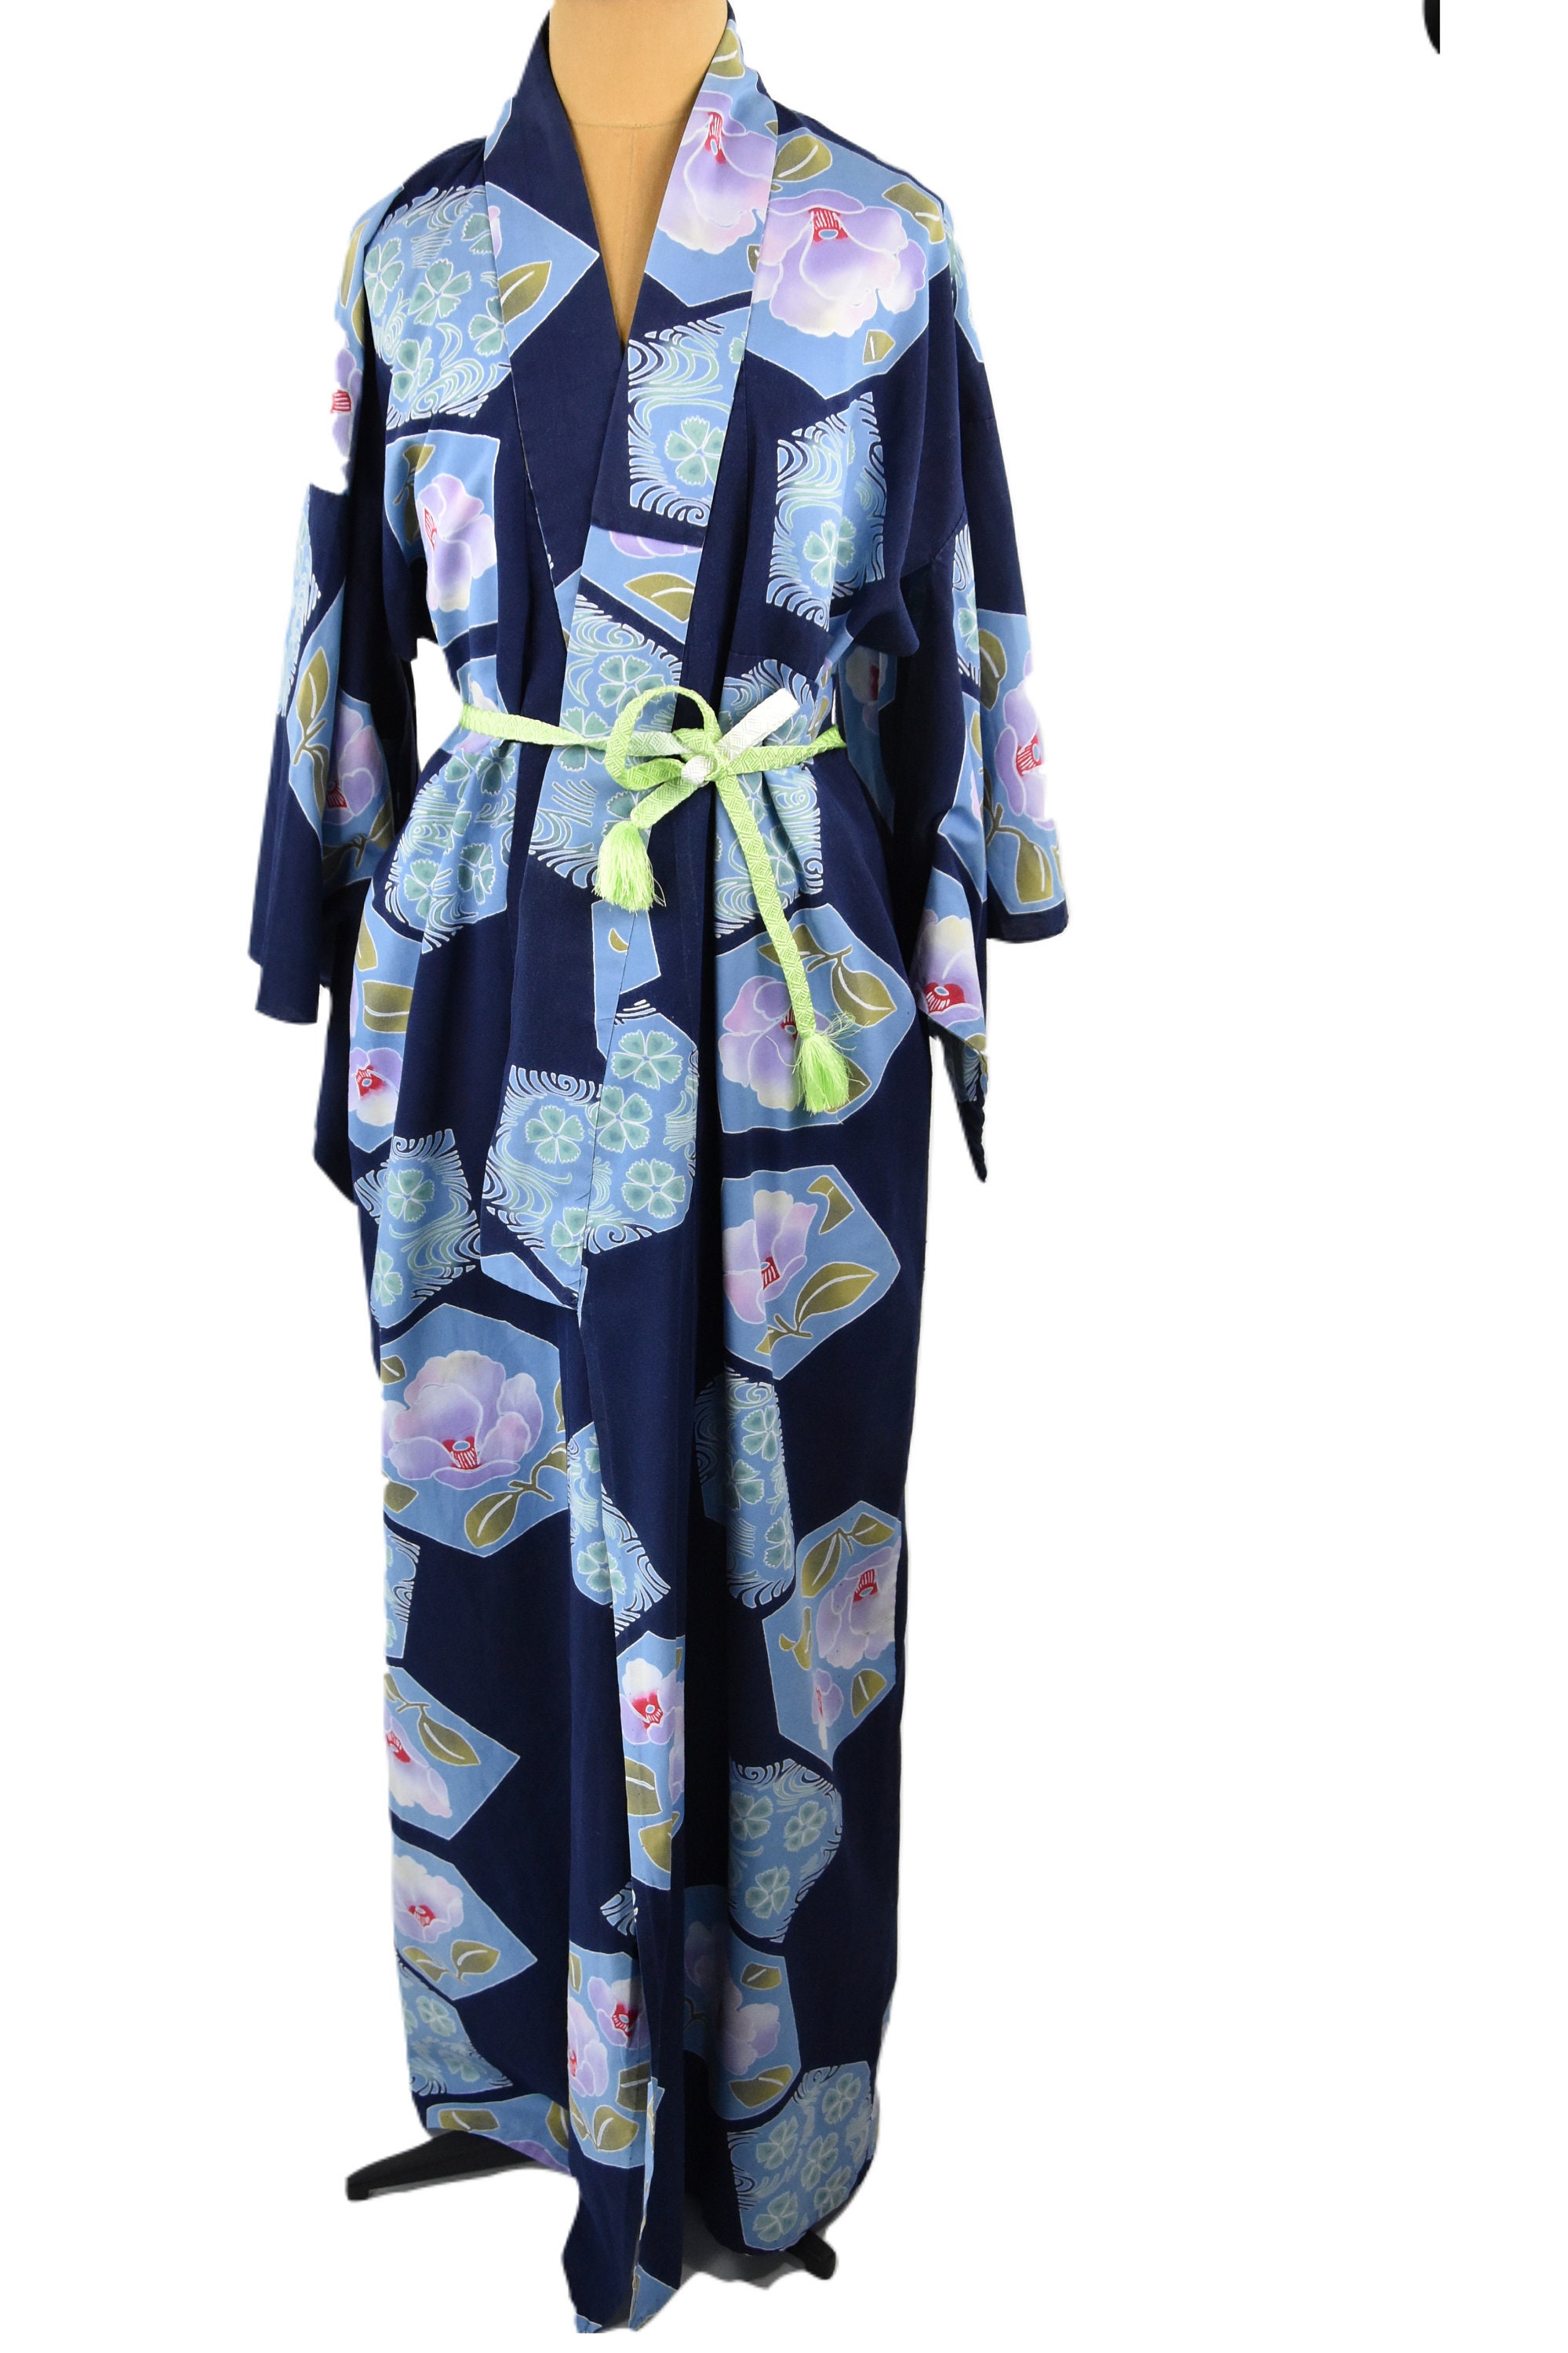 FANCY PUMPKIN Men's Yukata Robes Kimono Robe Khan Steamed Clothing Pajamas,  Black, Medium : Amazon.in: Clothing & Accessories